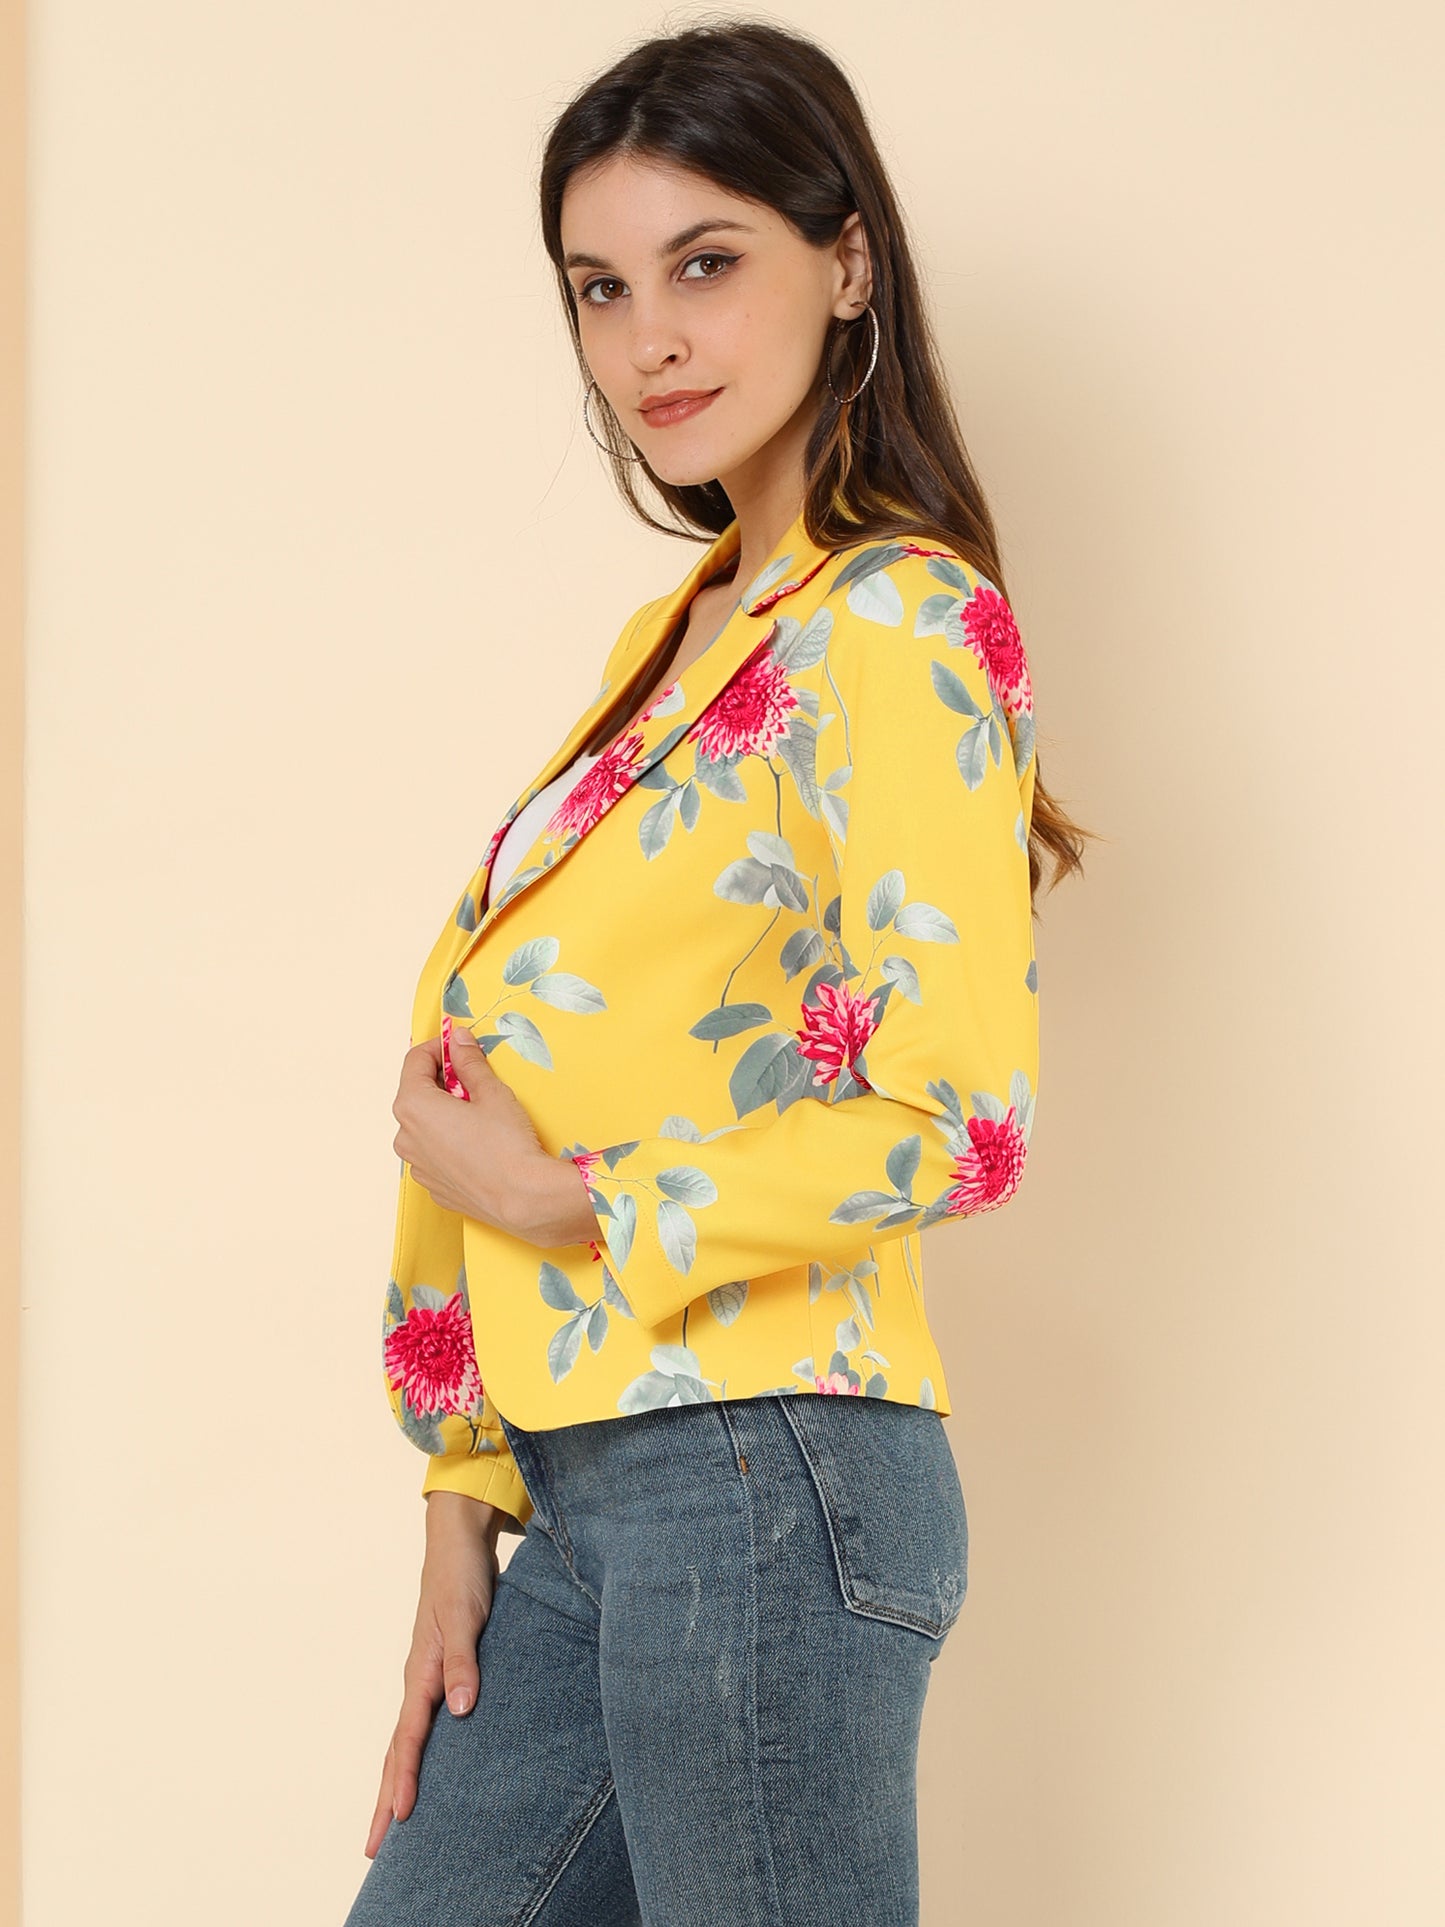 Allegra K Open Front Business Casual Workwear Crop Suit Blazer Jacket Yellow-Floral